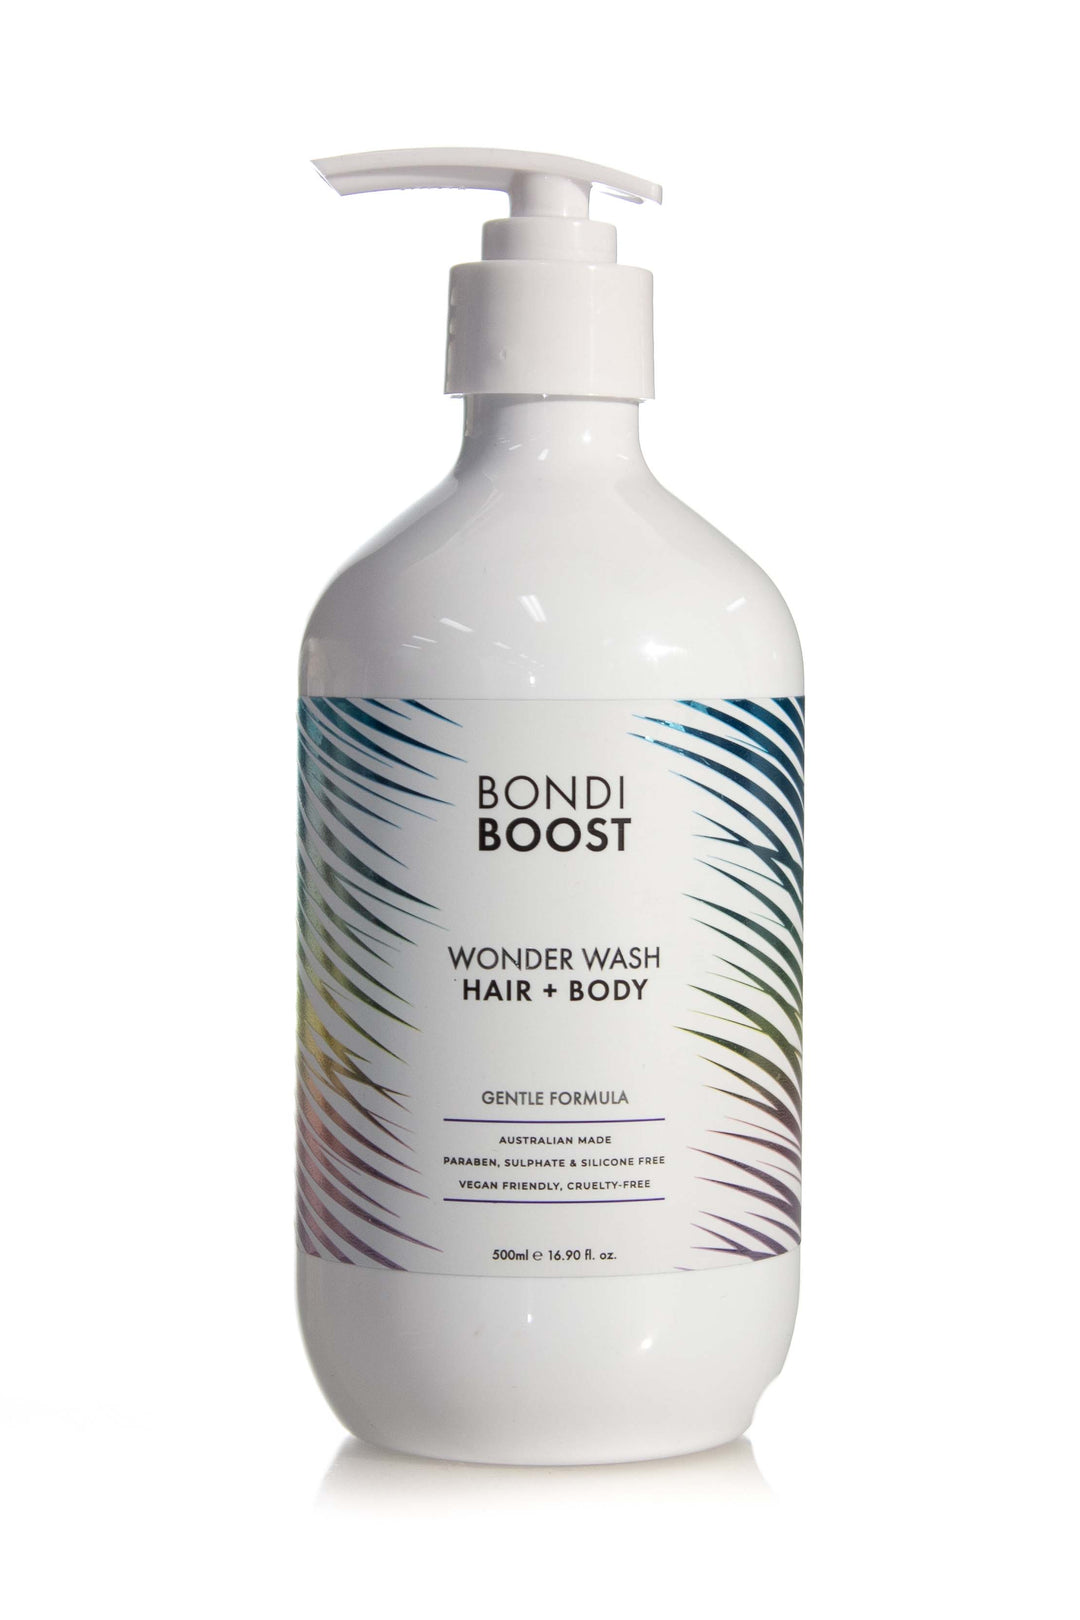 Bondi Boost Wonder Wash Hair and Body